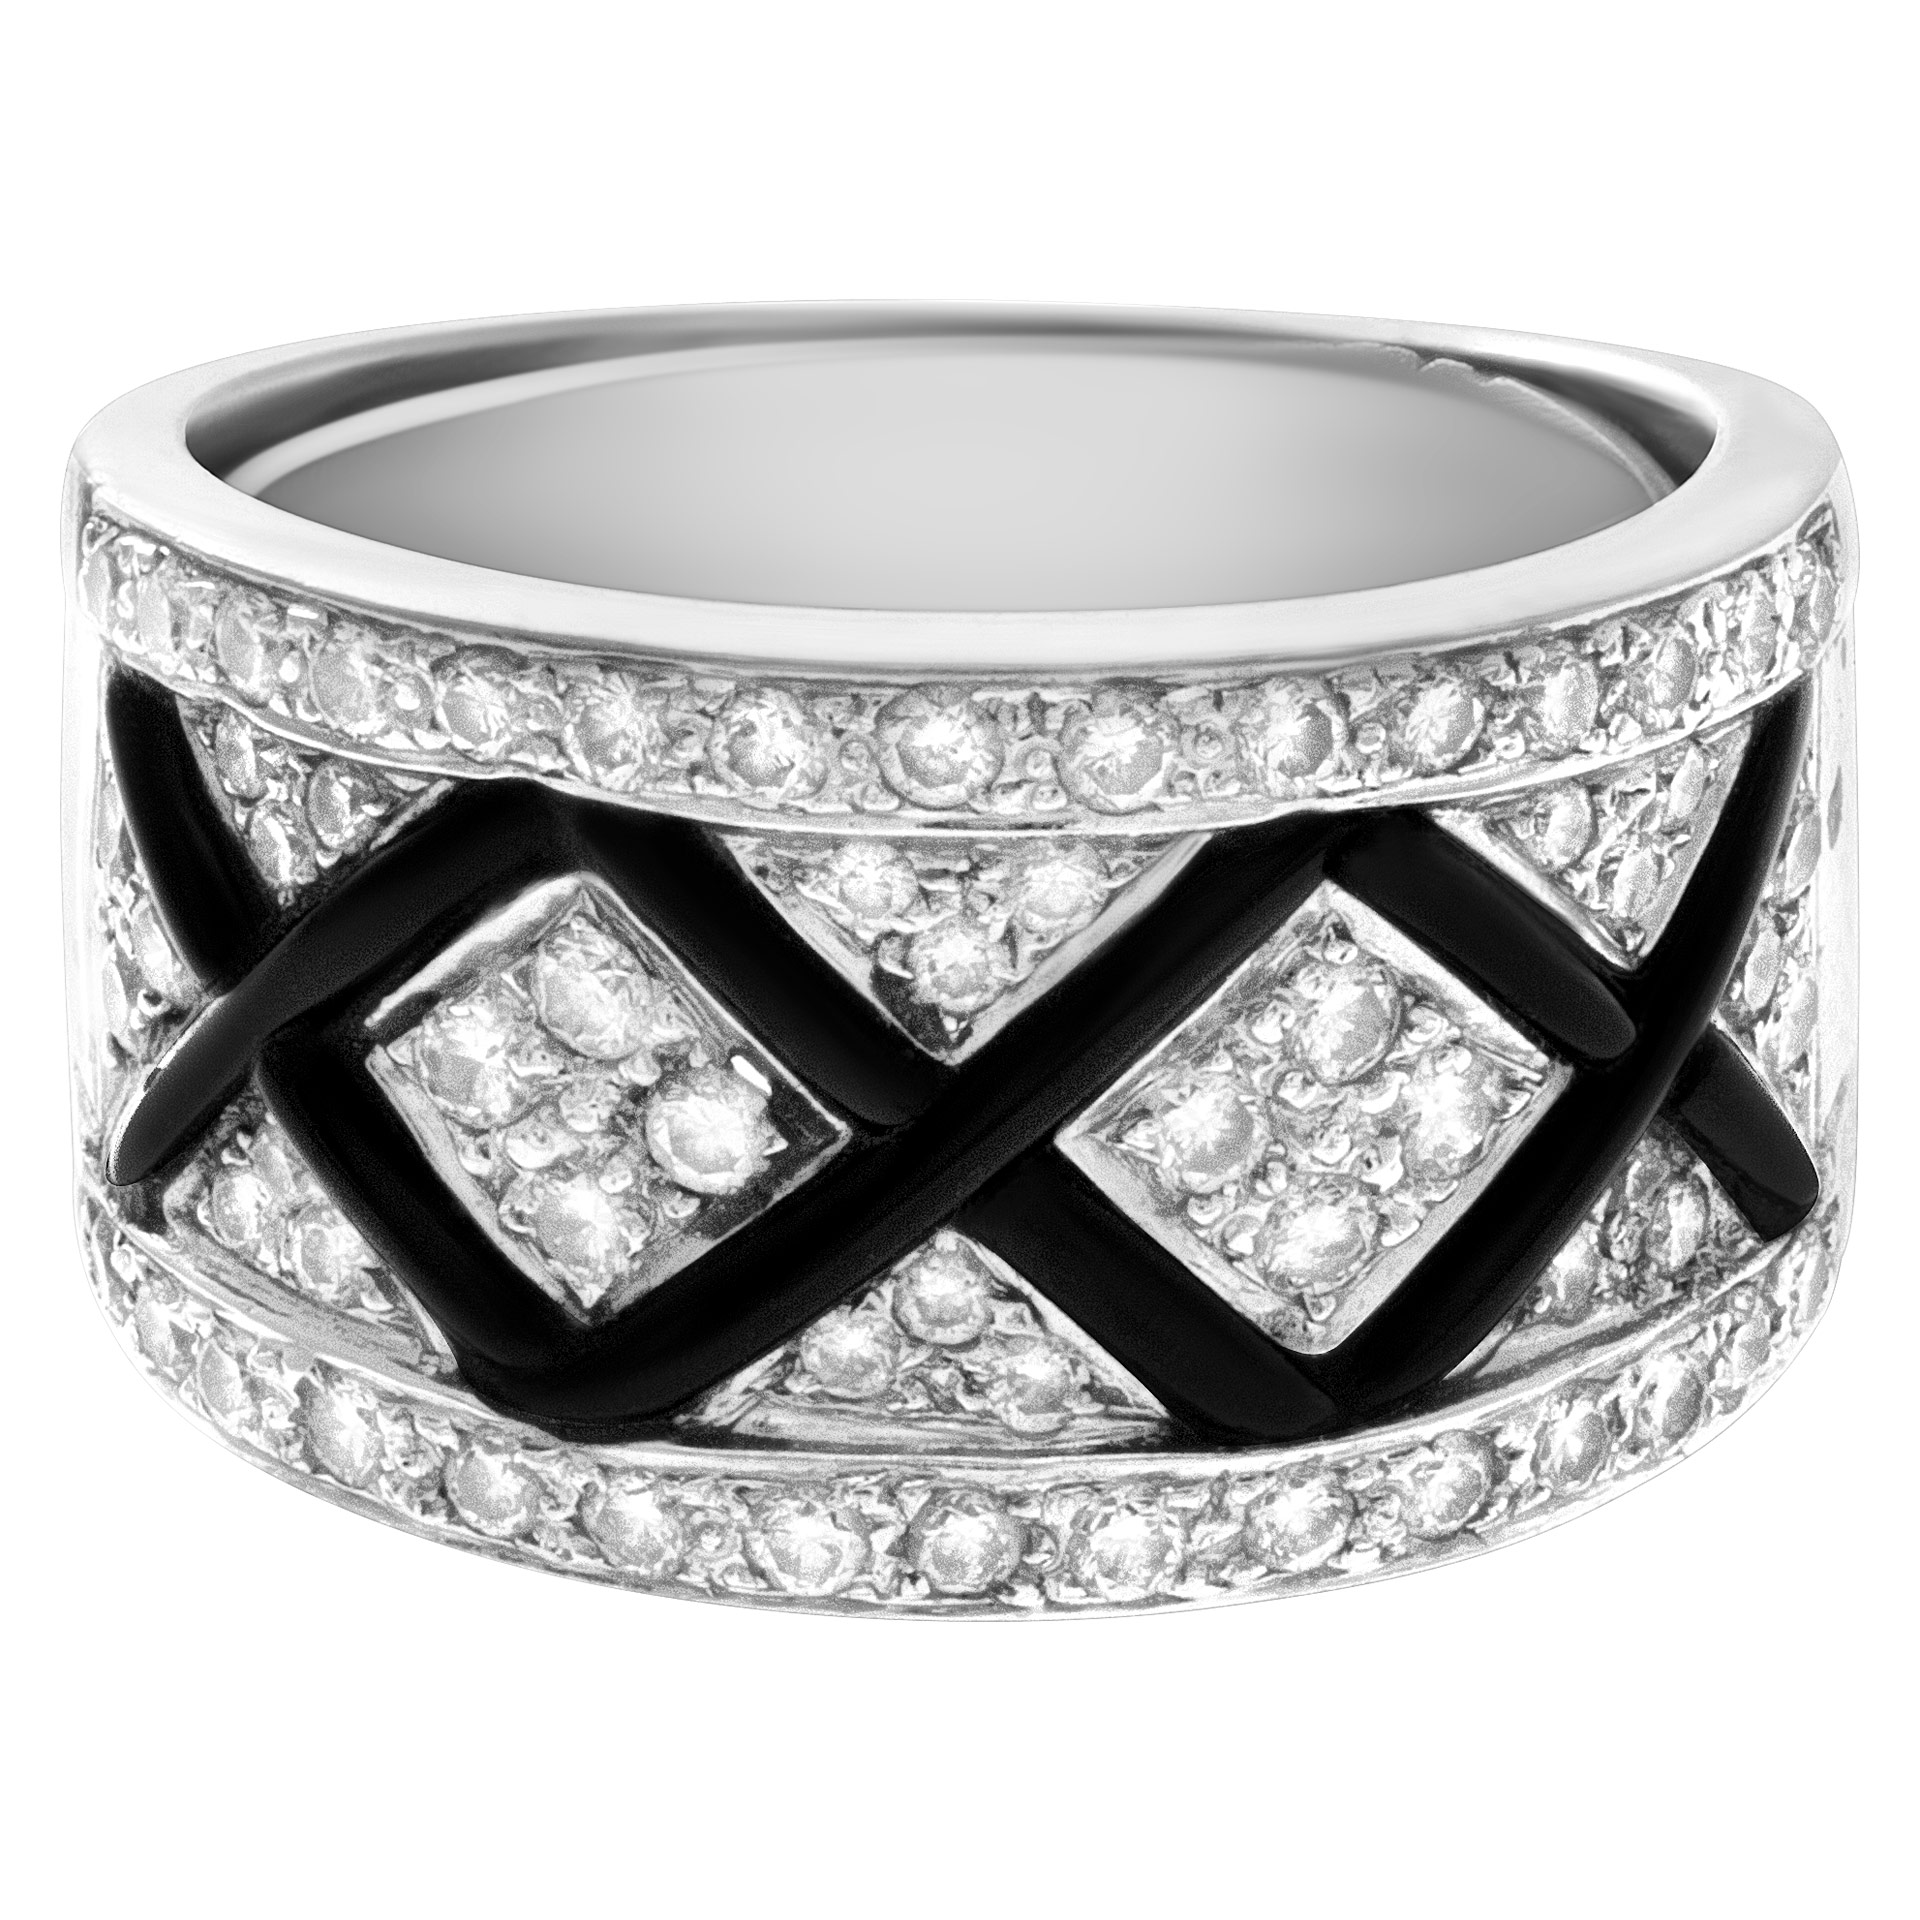 Black enamel and diamond ring in 18k white gold. 1.00 carats in diamonds image 1